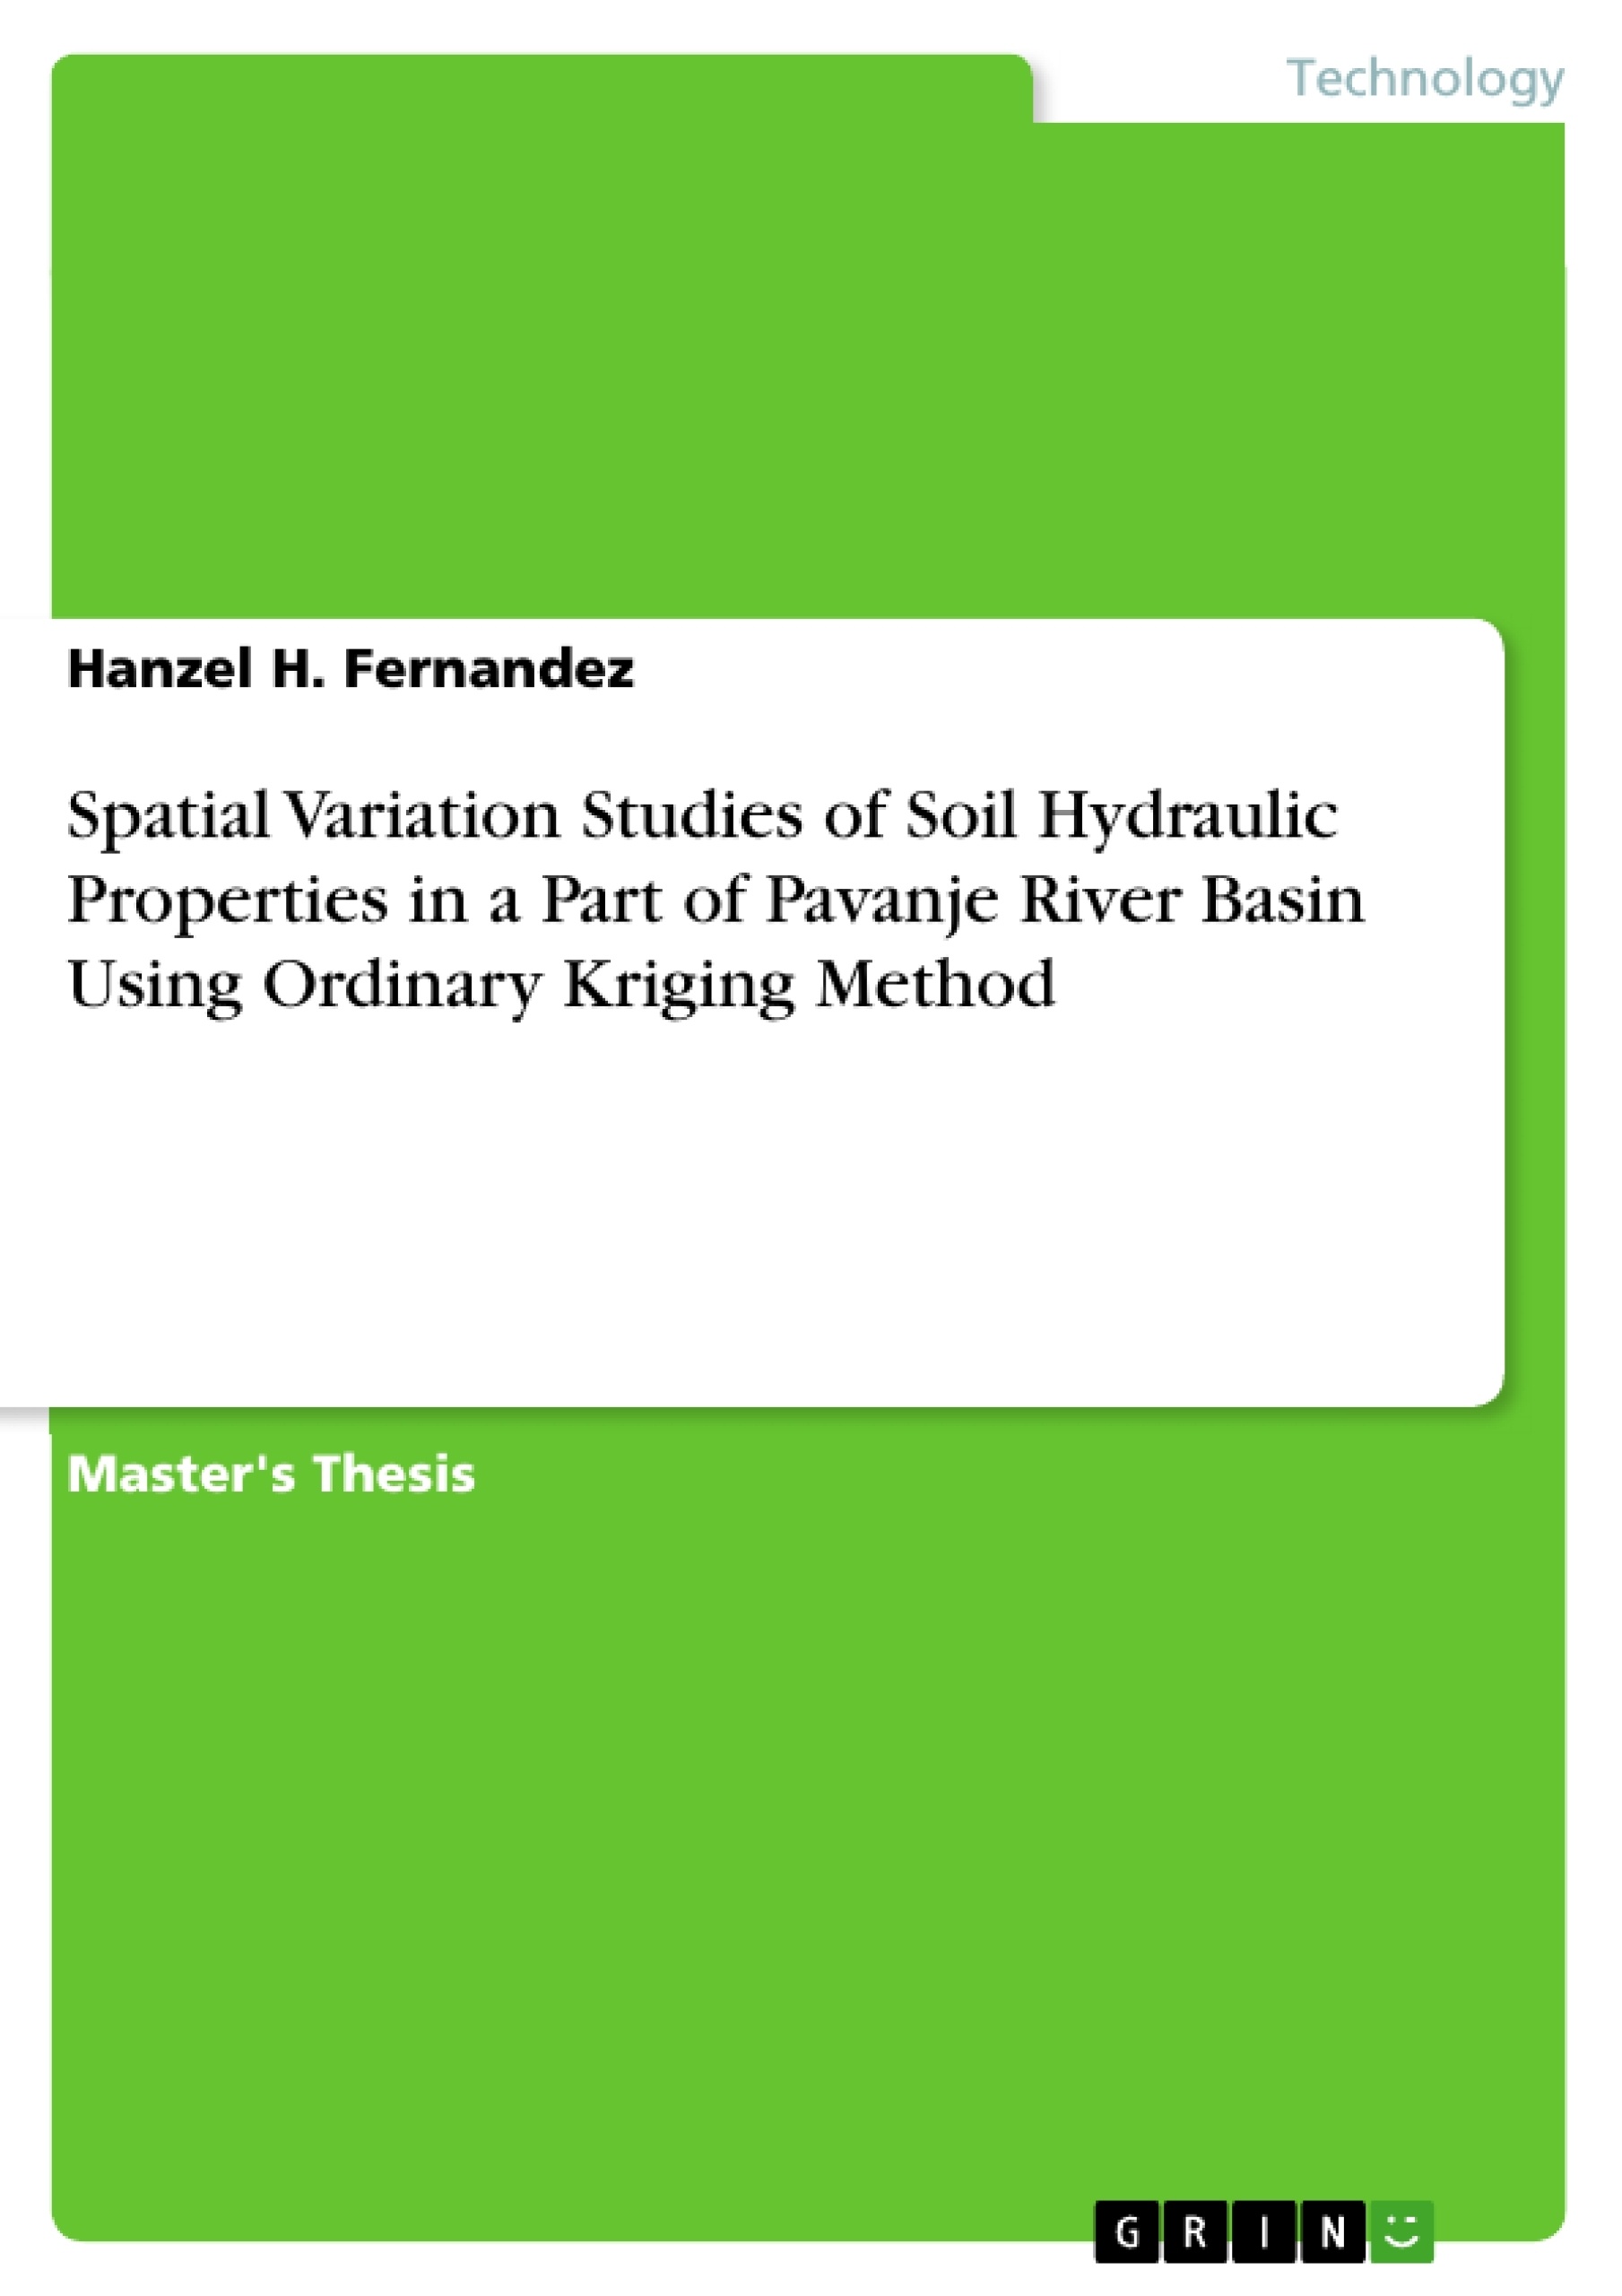 Title: Spatial Variation Studies of Soil Hydraulic Properties in a Part of Pavanje River Basin Using Ordinary Kriging Method